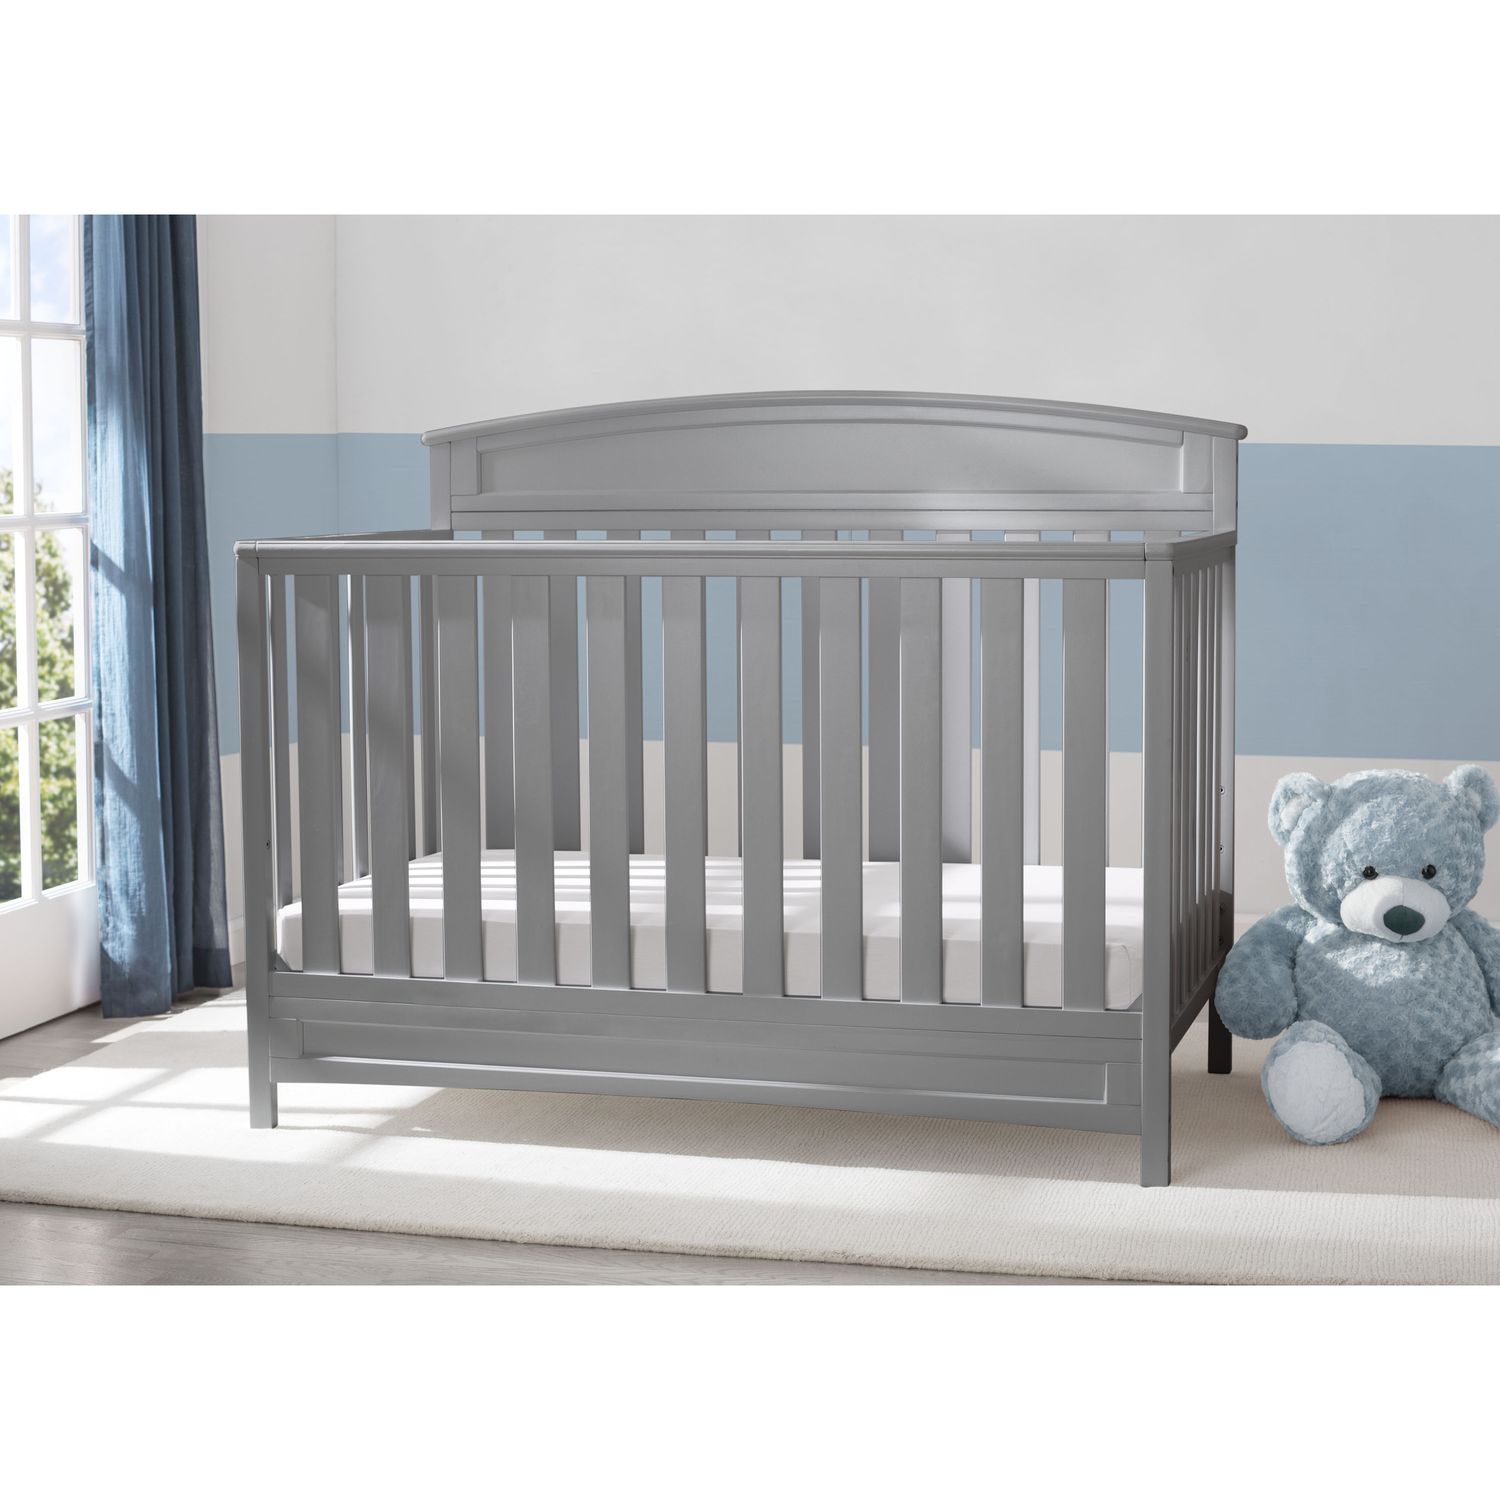 4 in 1 baby crib